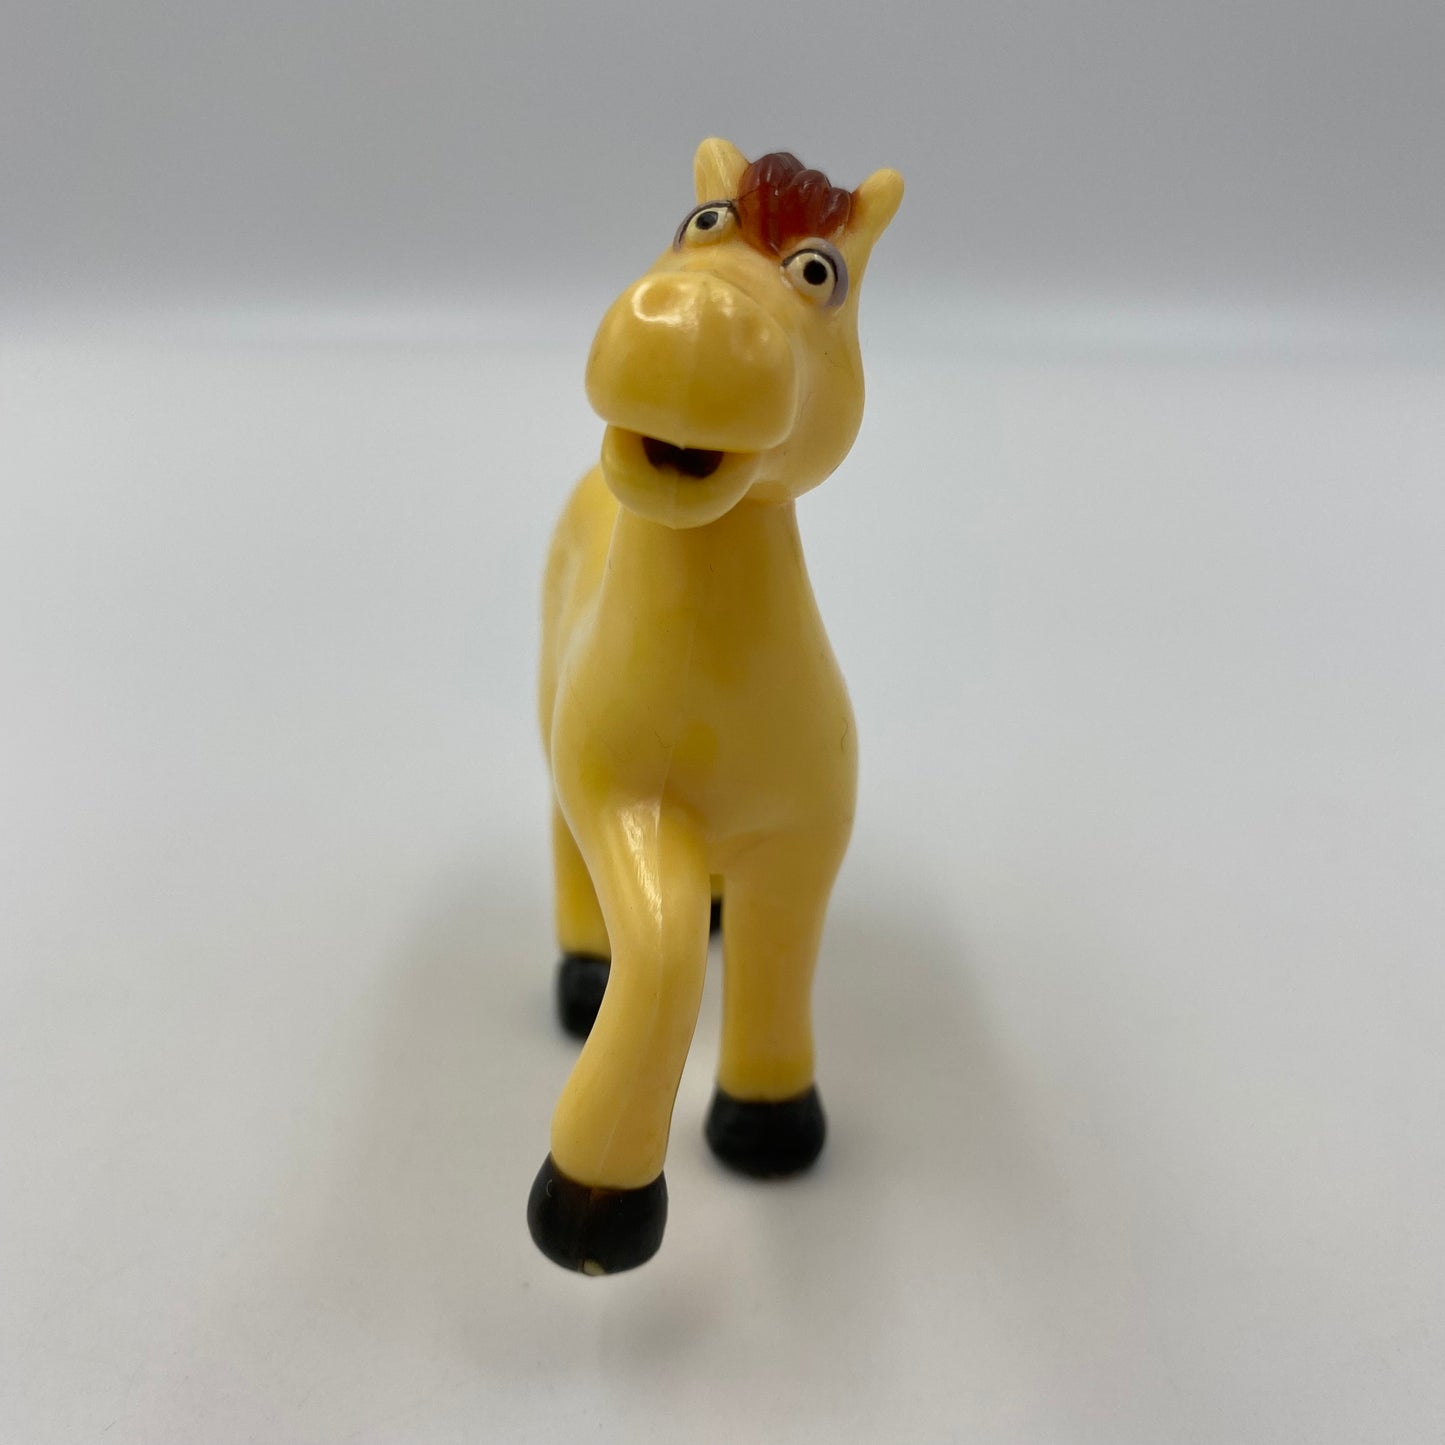 Sesame Street Farm: Farm Animals figurines (early 90’s) Illco/Tyco